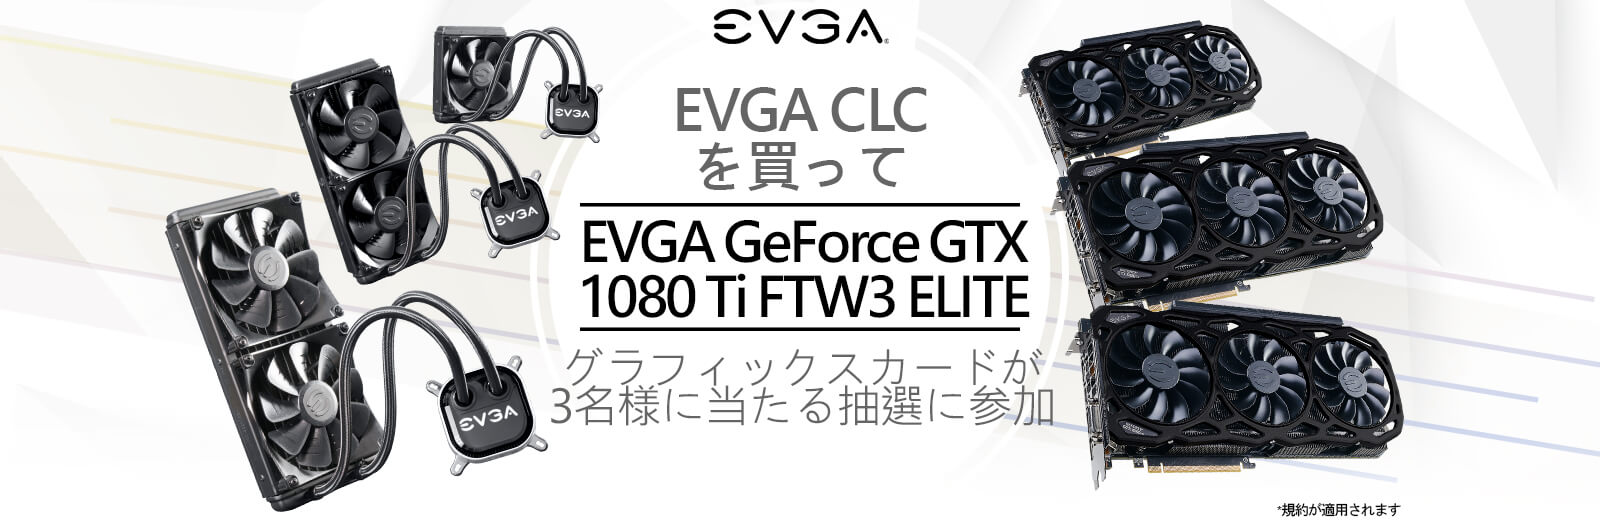 EVGA CLCを買って EVGA GeForce GTX 1080 Ti FTW3 ELITE グラフィックスカードが3名様に当たる抽選に参加